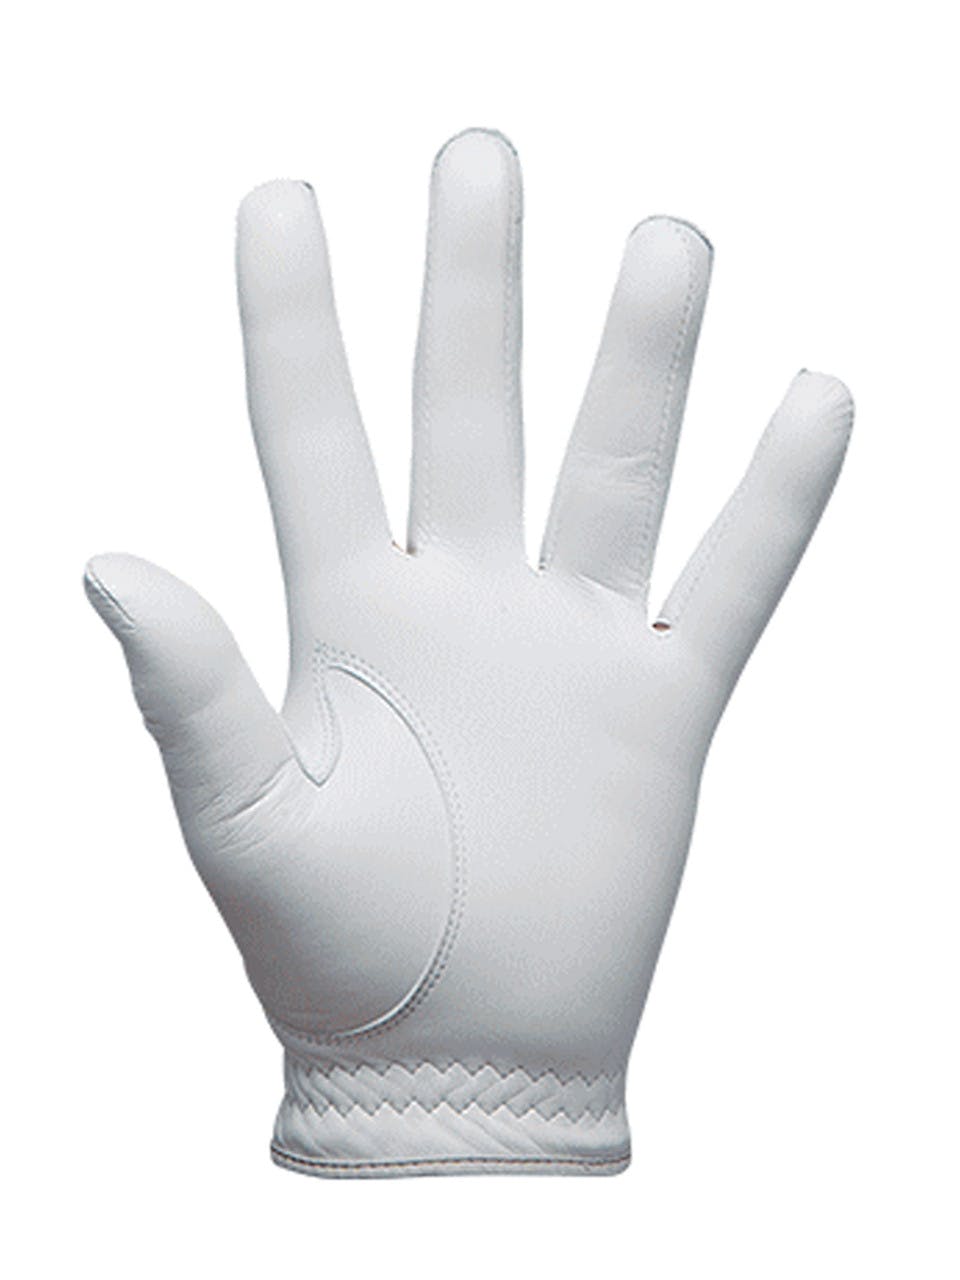 Bridgestone Men's Tour Premium Worn on Left Hand Golf Glove · Cadet Small · White